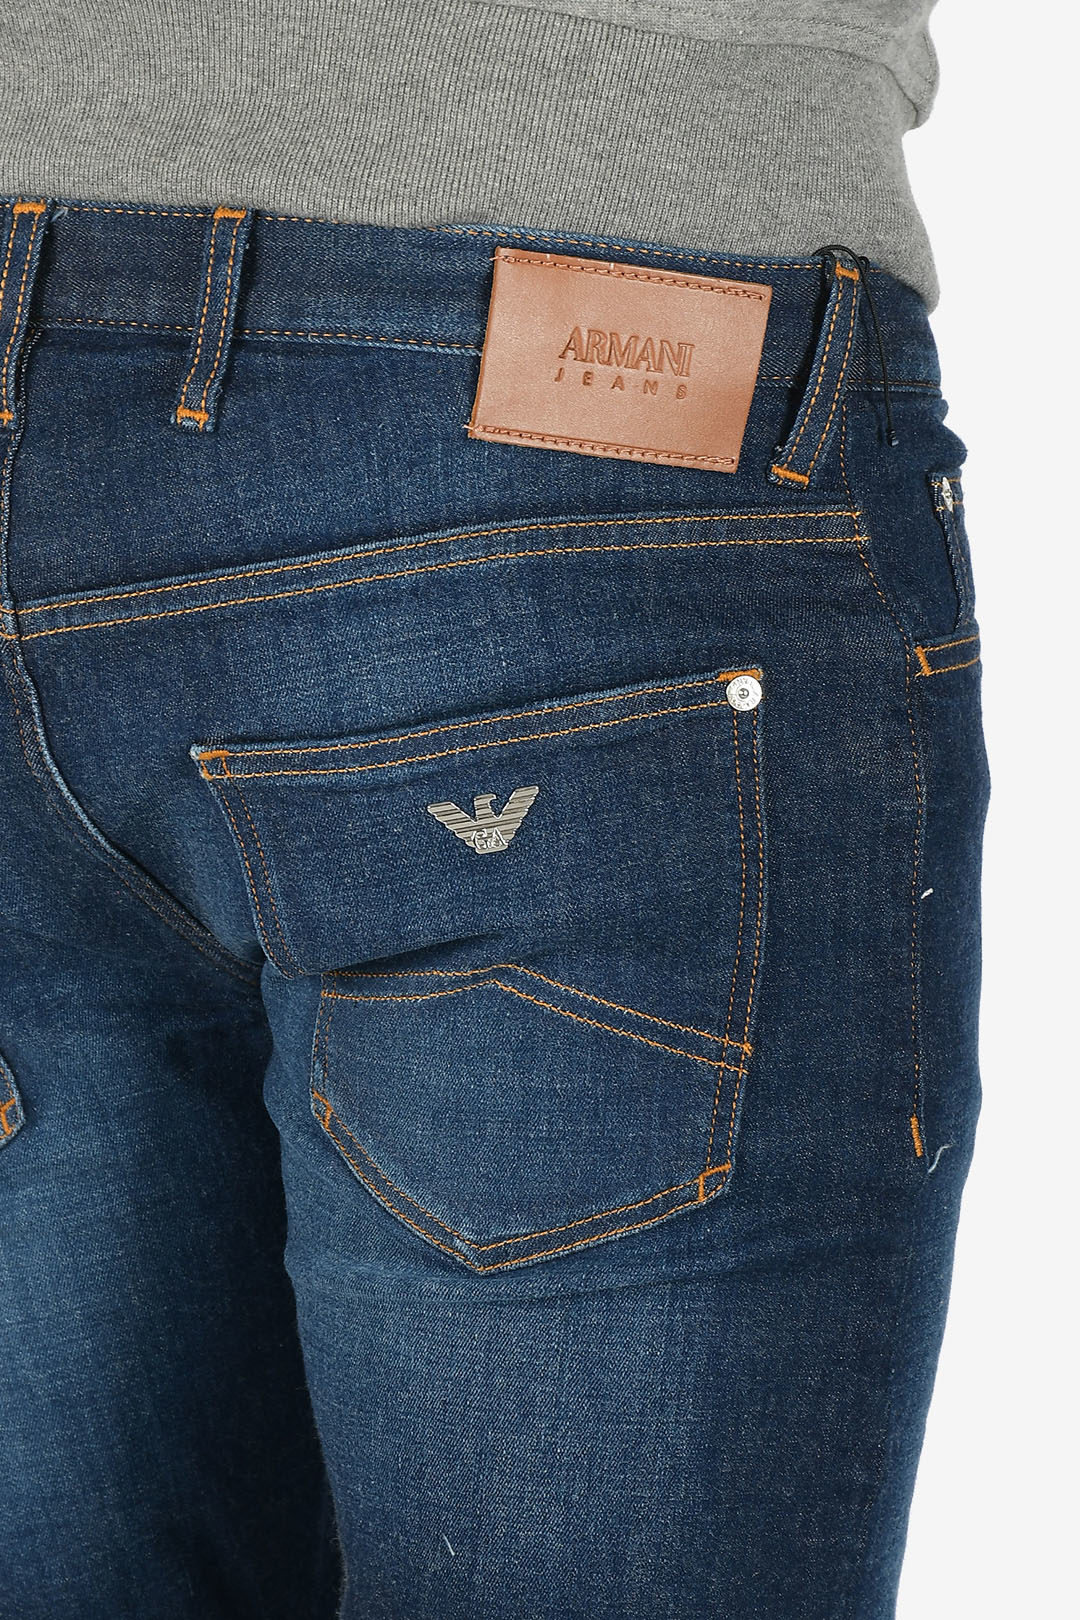 Armani JEANS Extra Slim Fit J10 Jeans herren - Glamood Outlet